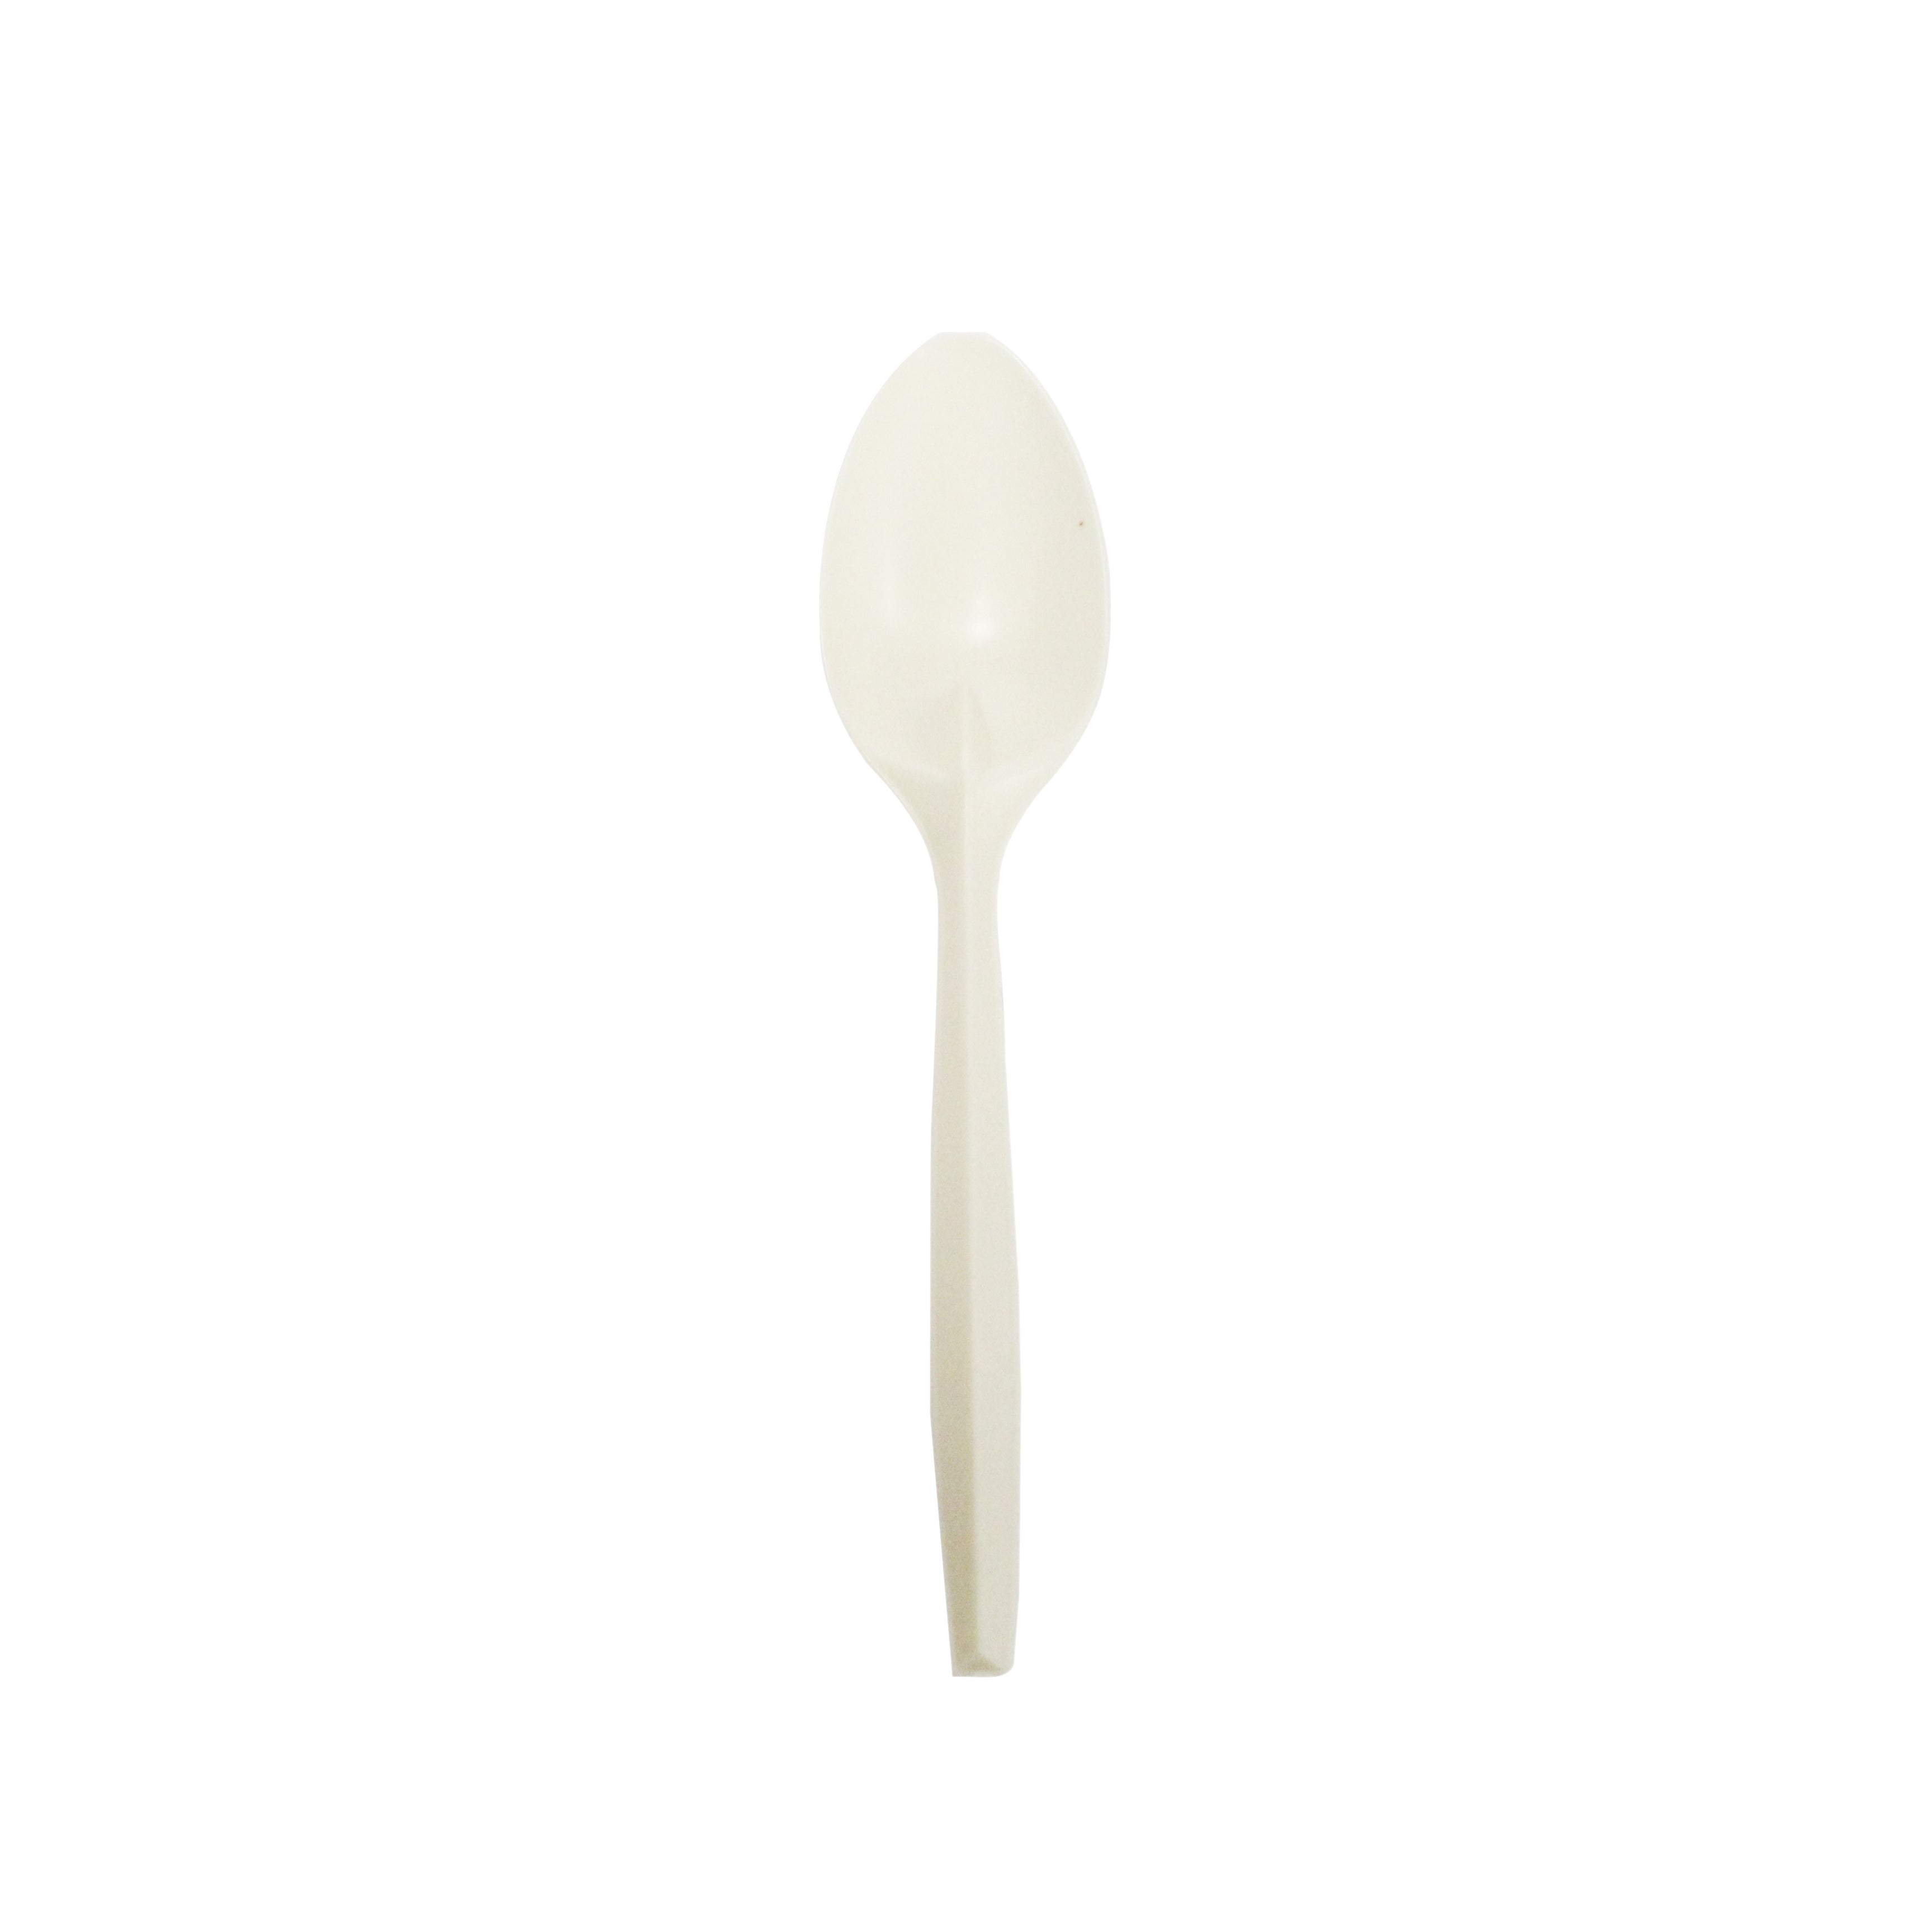 PLA Biodegradable White Plastic Spoon